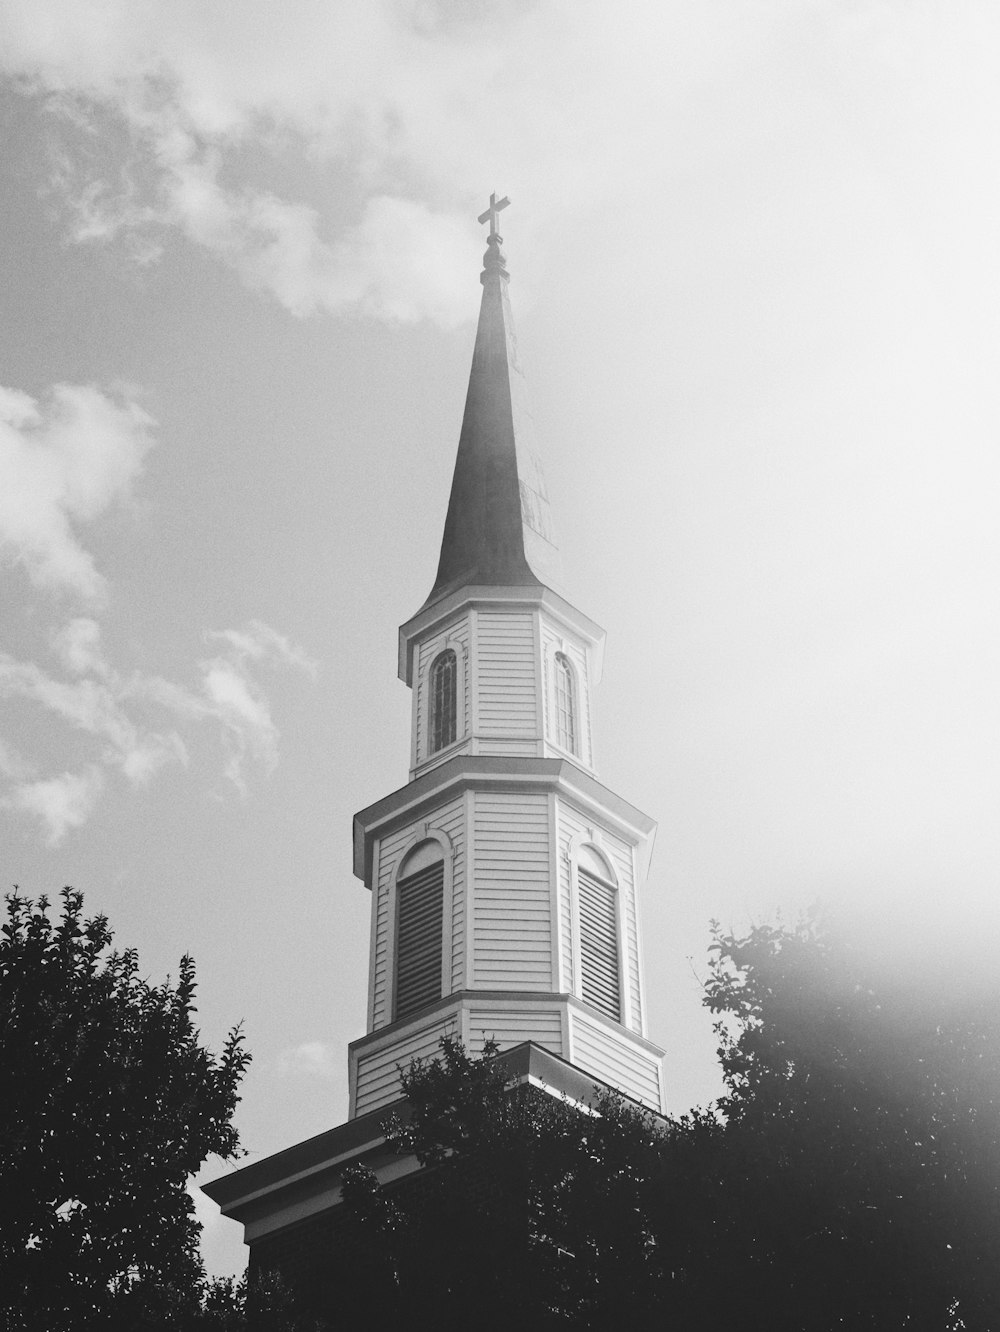 Graustufenfoto der Kirche unter bewölktem Himmel